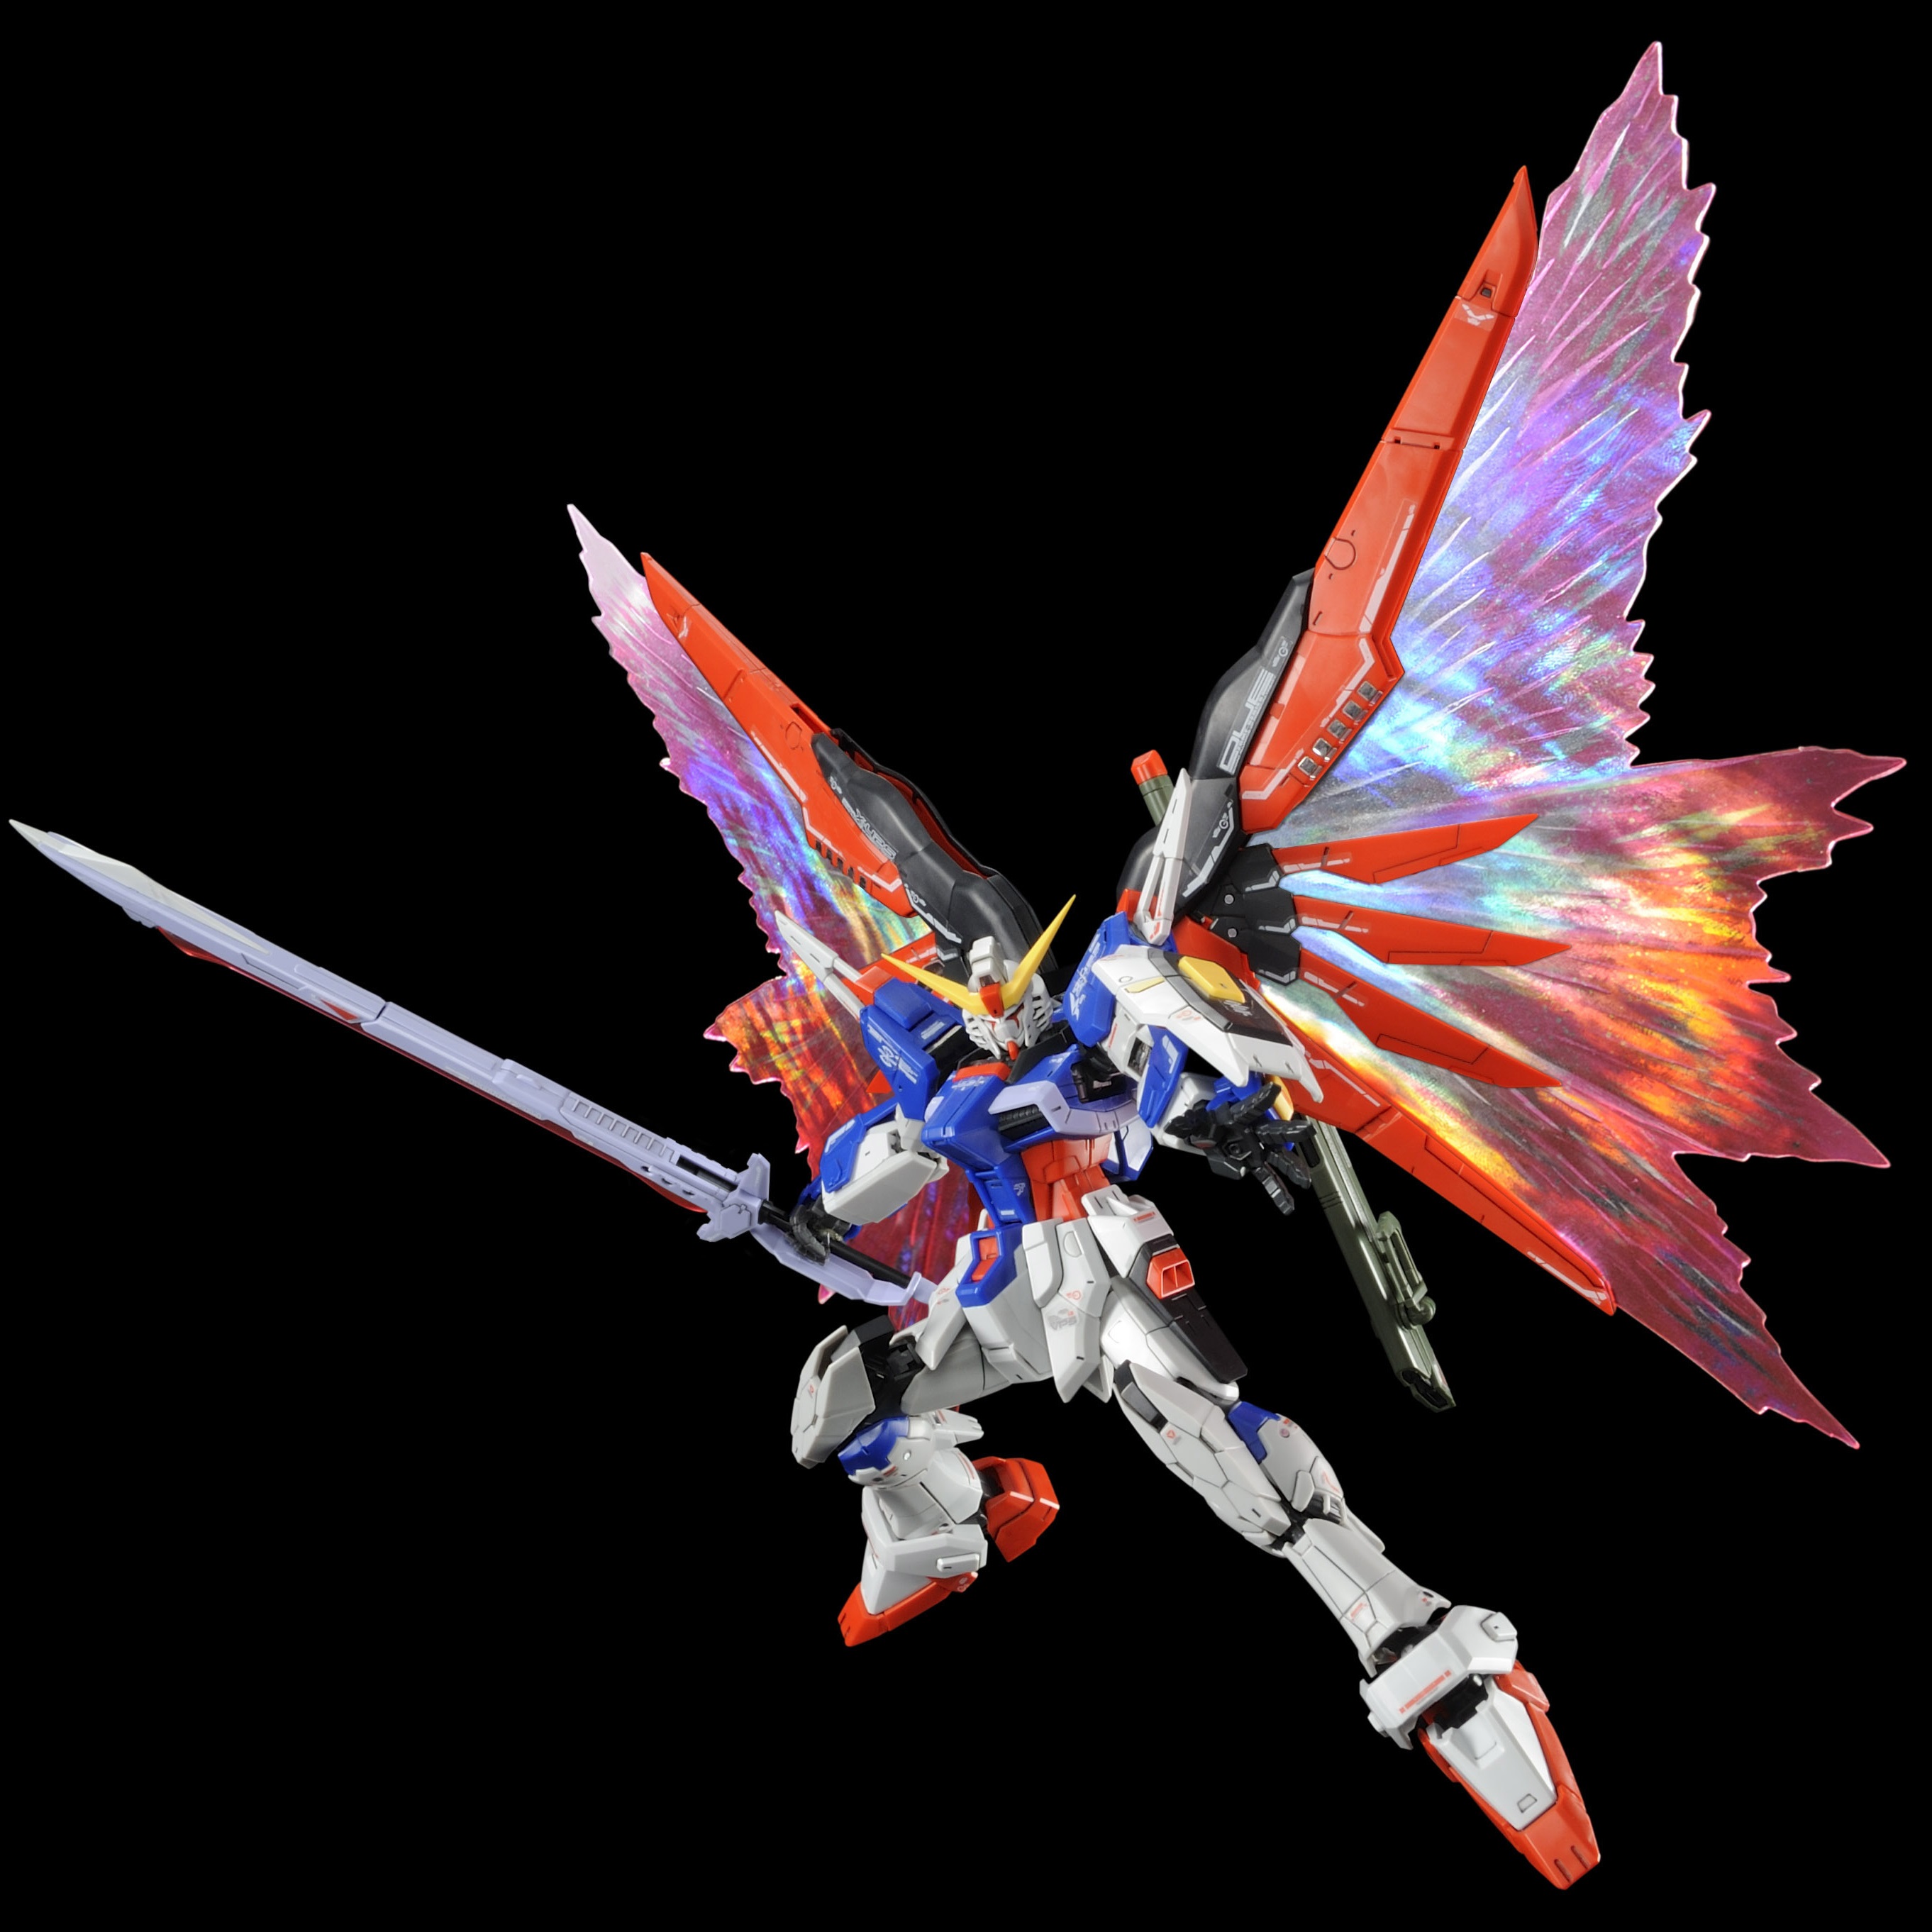 Rg 1144 Destiny Gundam Effect Unit Lightning Wing Sep 2020 Delivery